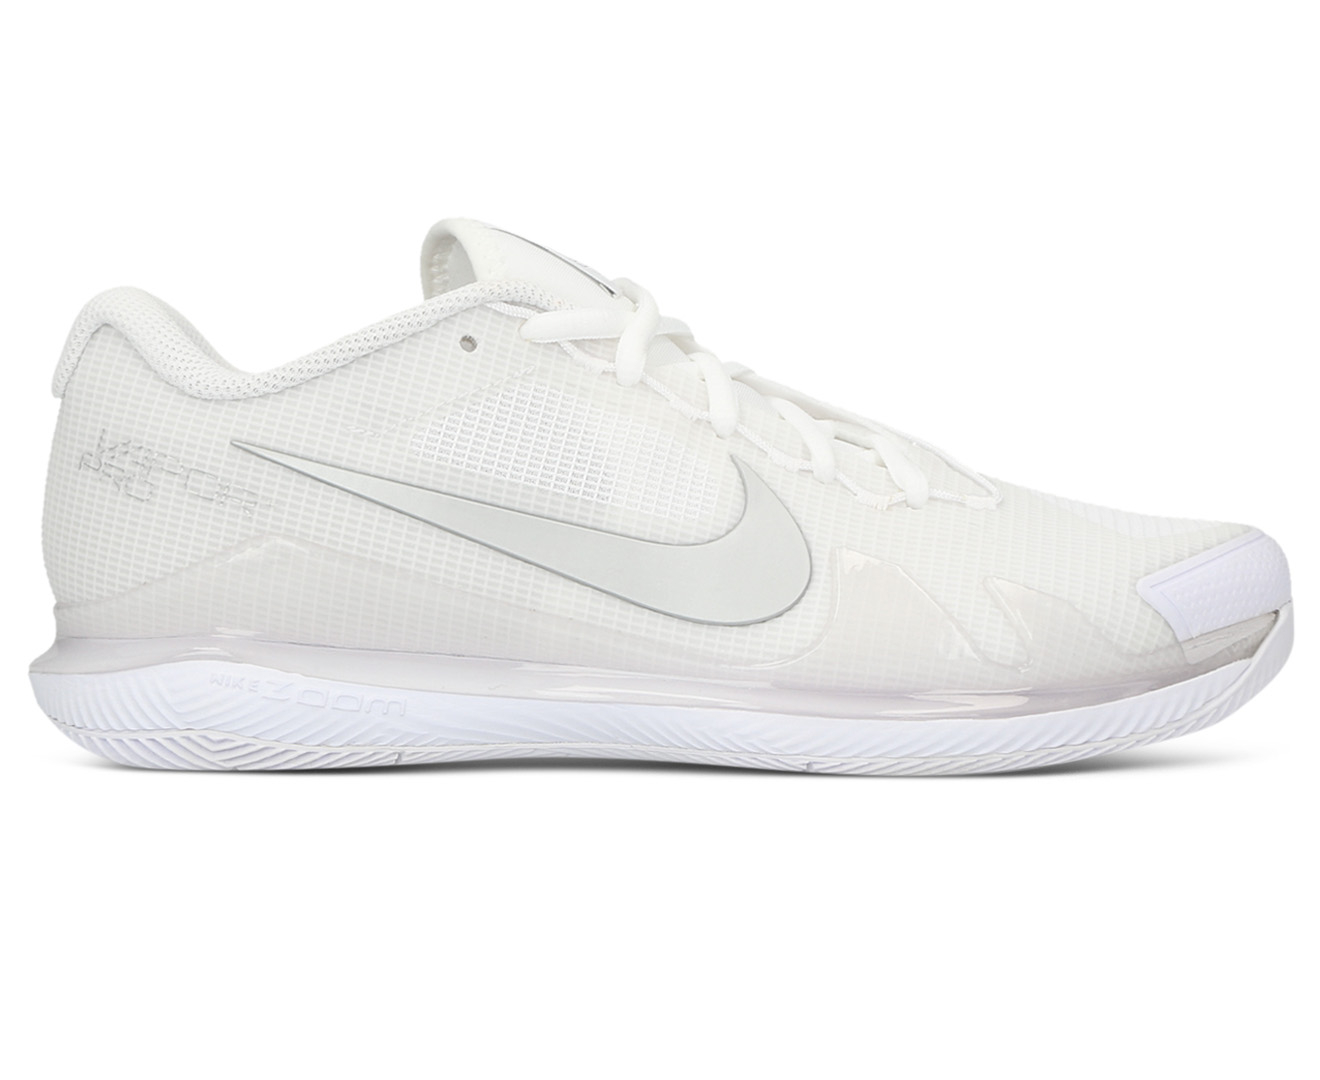 Nike Women #39 s Air Zoom Vapor Pro Hard Court Tennis Shoes White